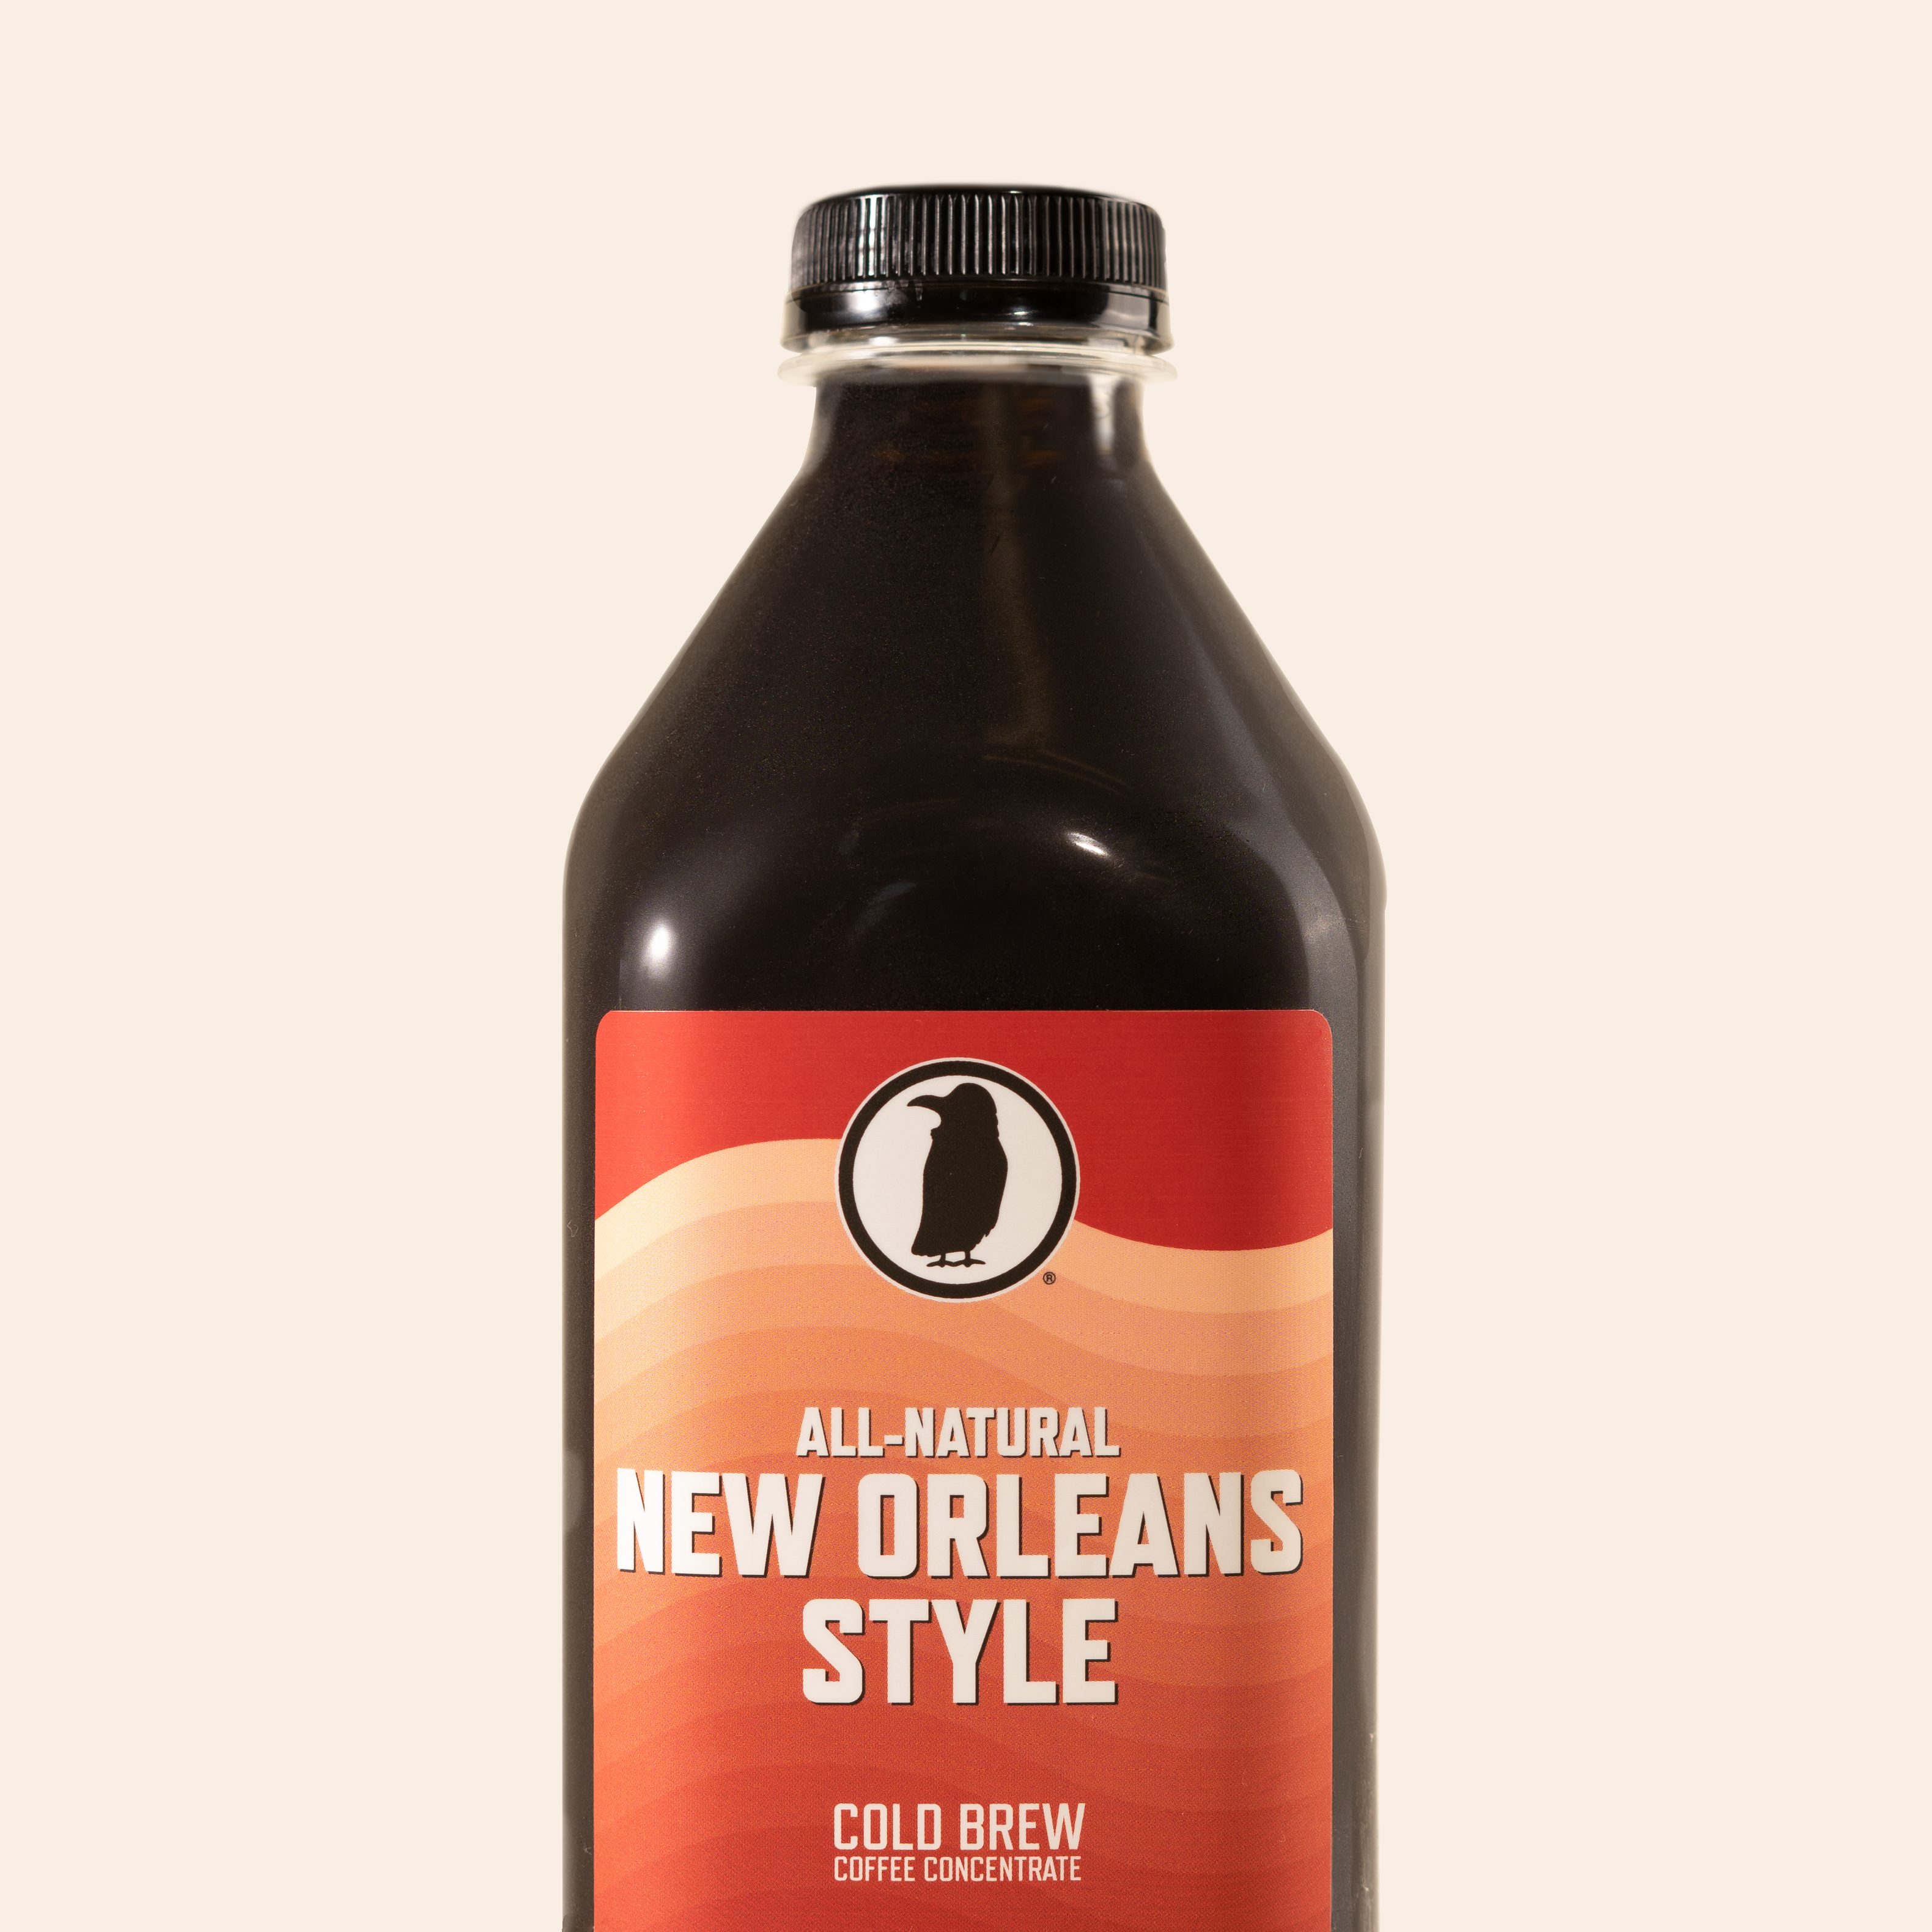 16 oz. Iced Coffee Tumbler - New Orleans Roast